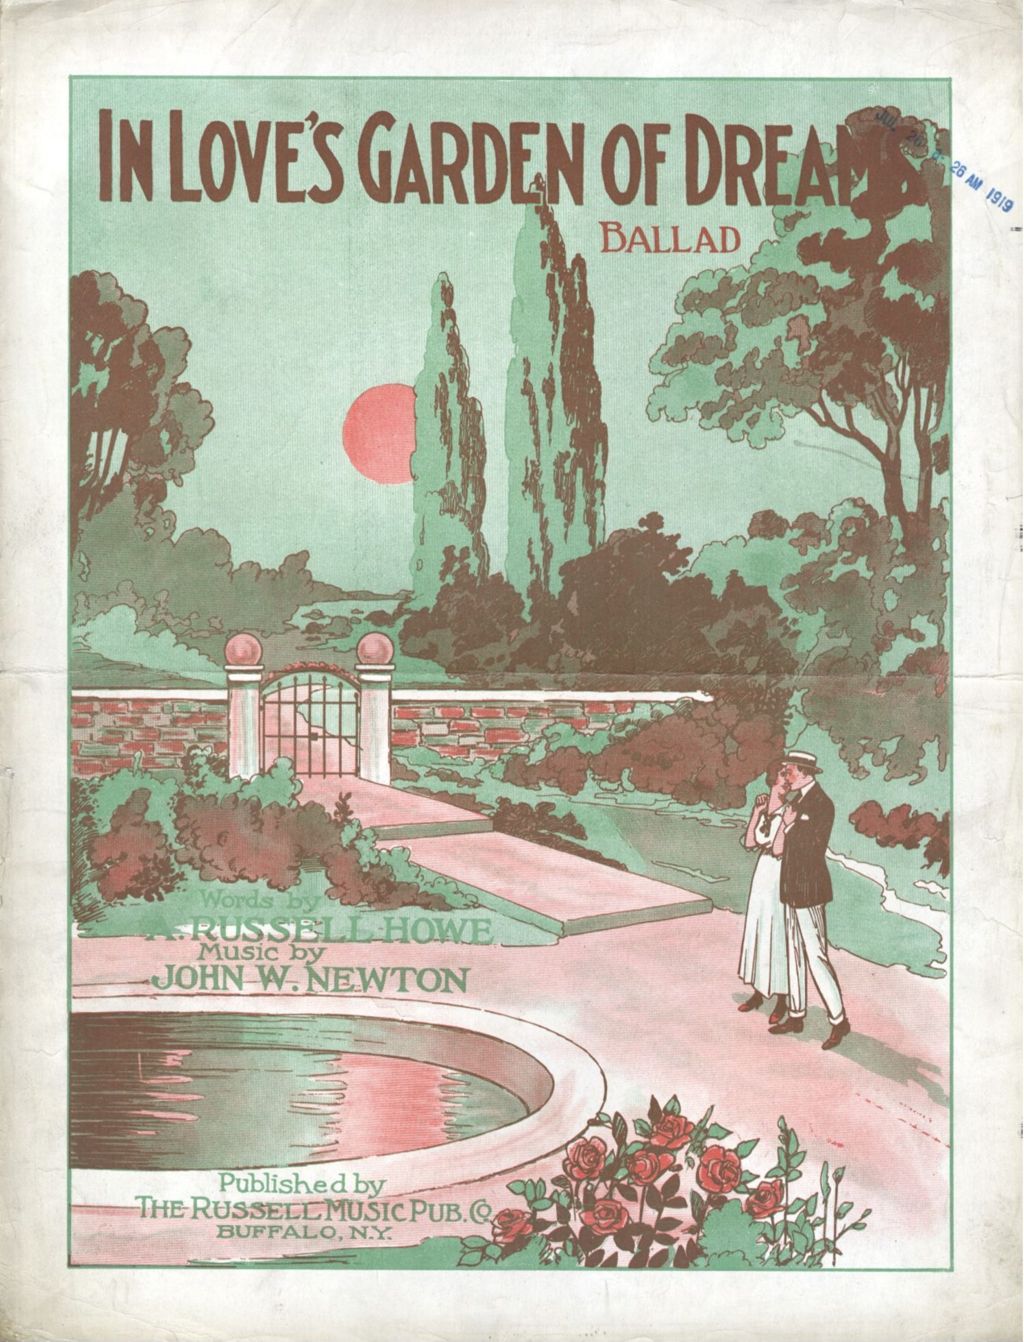 In Love's Garden of Dreams